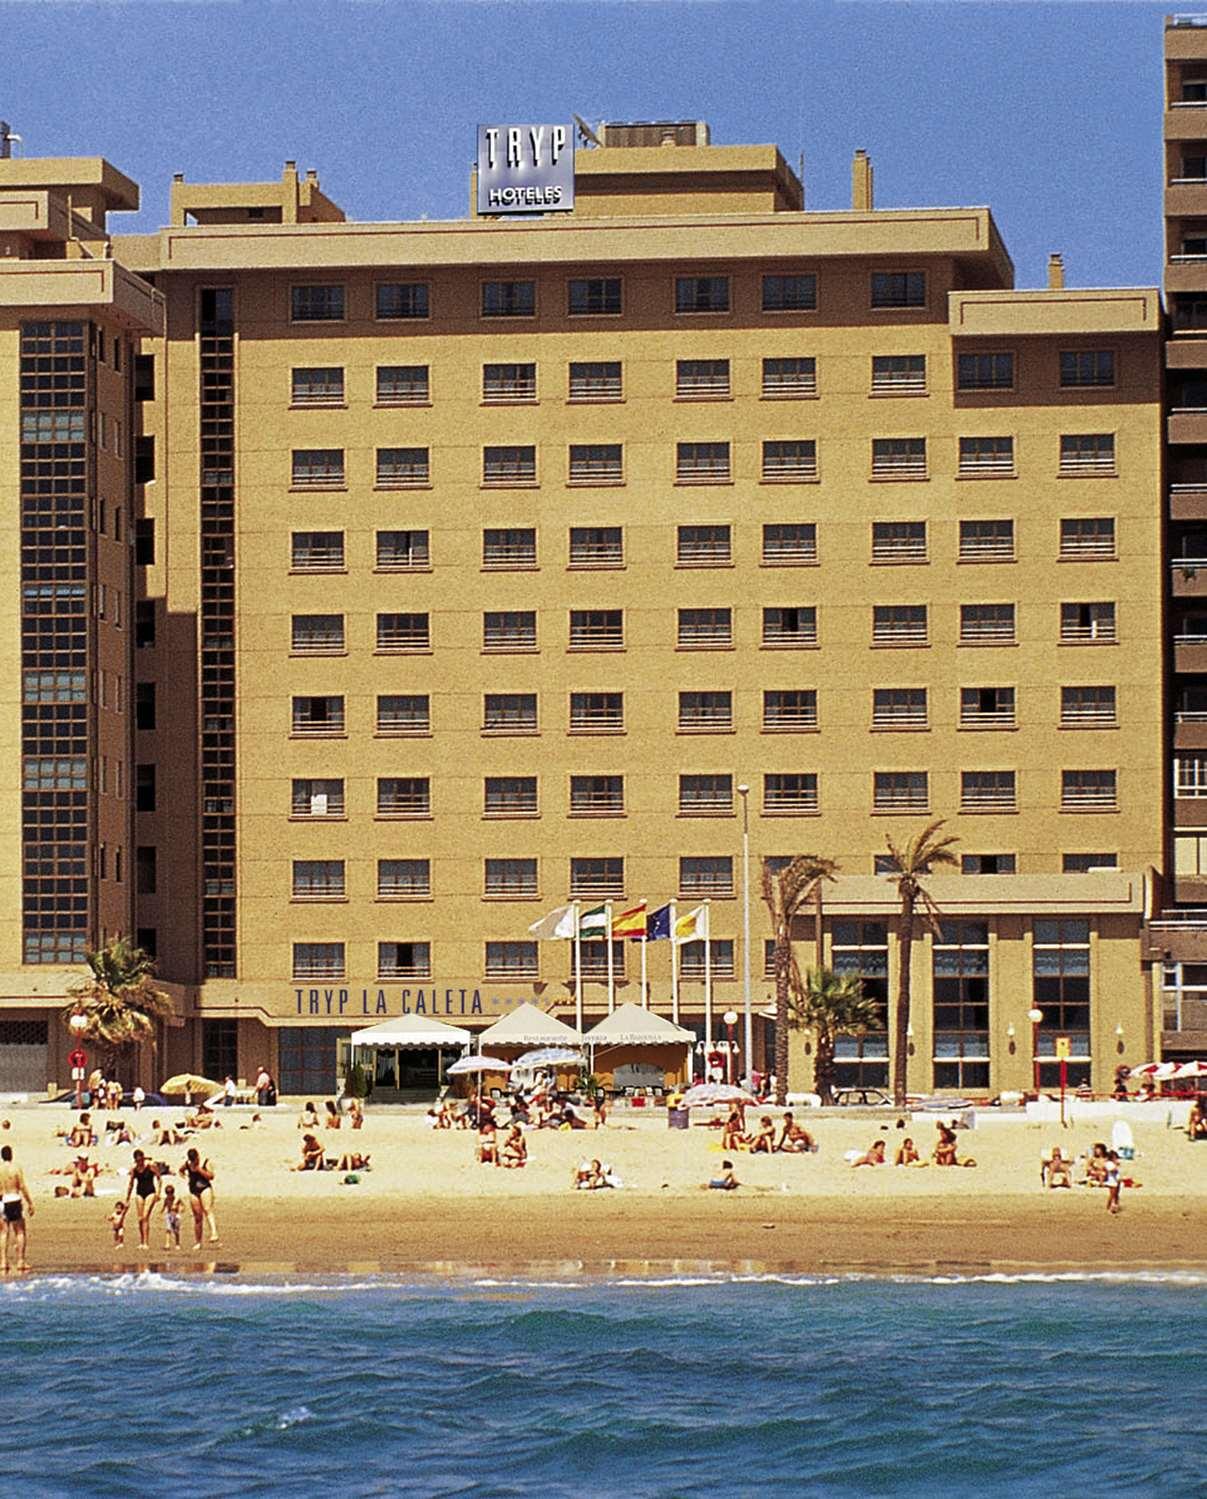 Playa TRYP Cádiz La Caleta Hotel